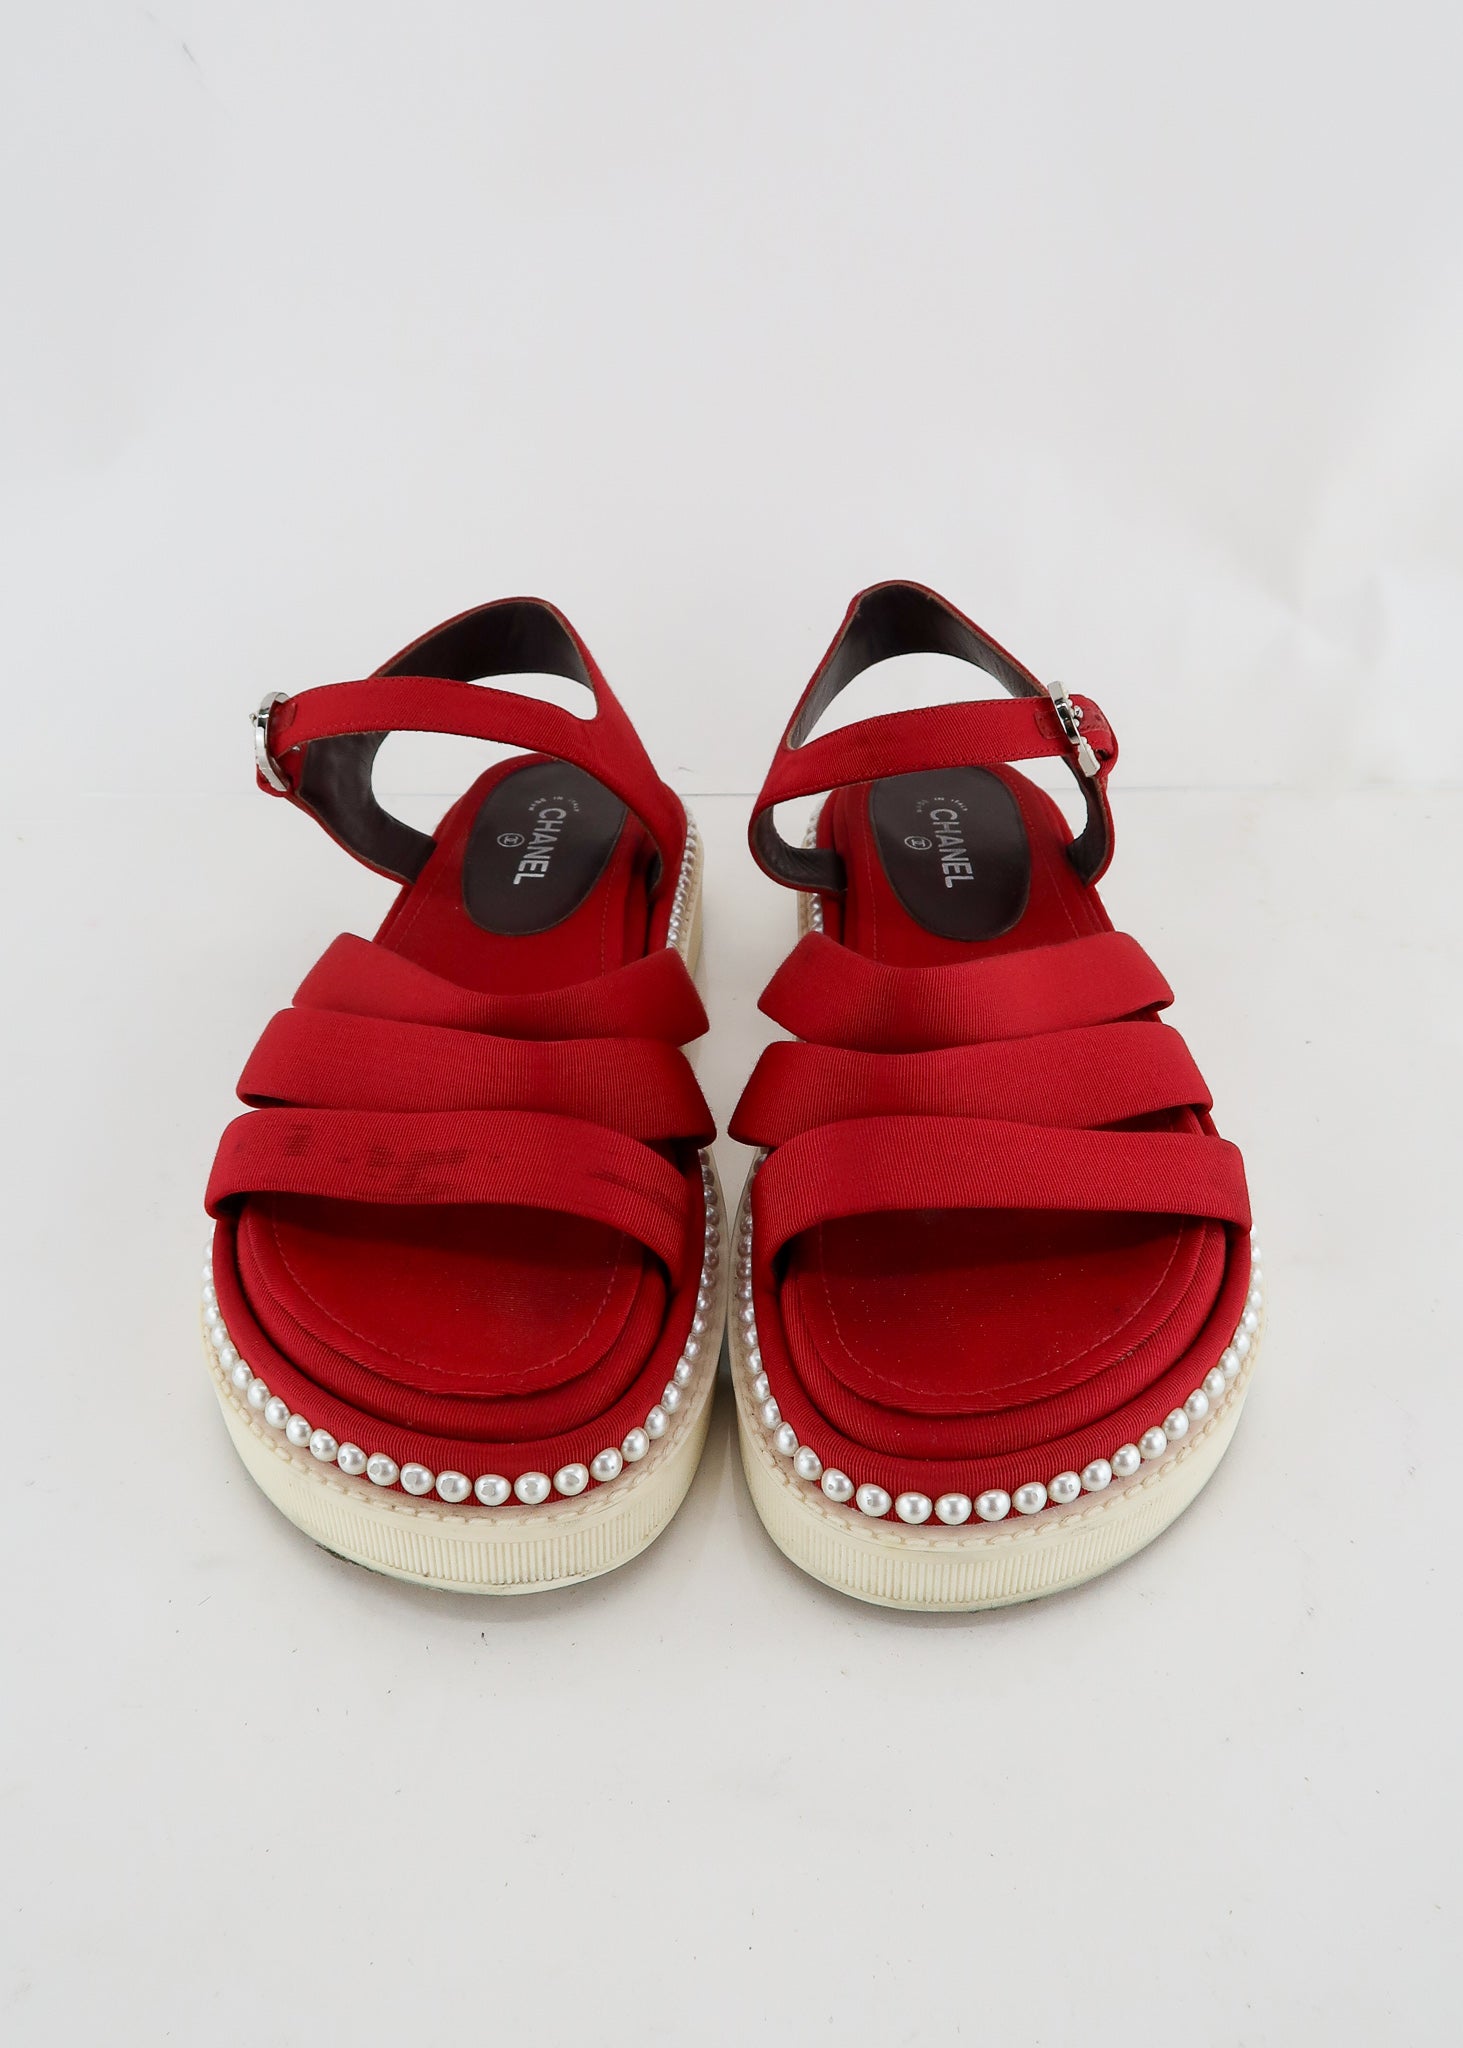 chanel patent sandals